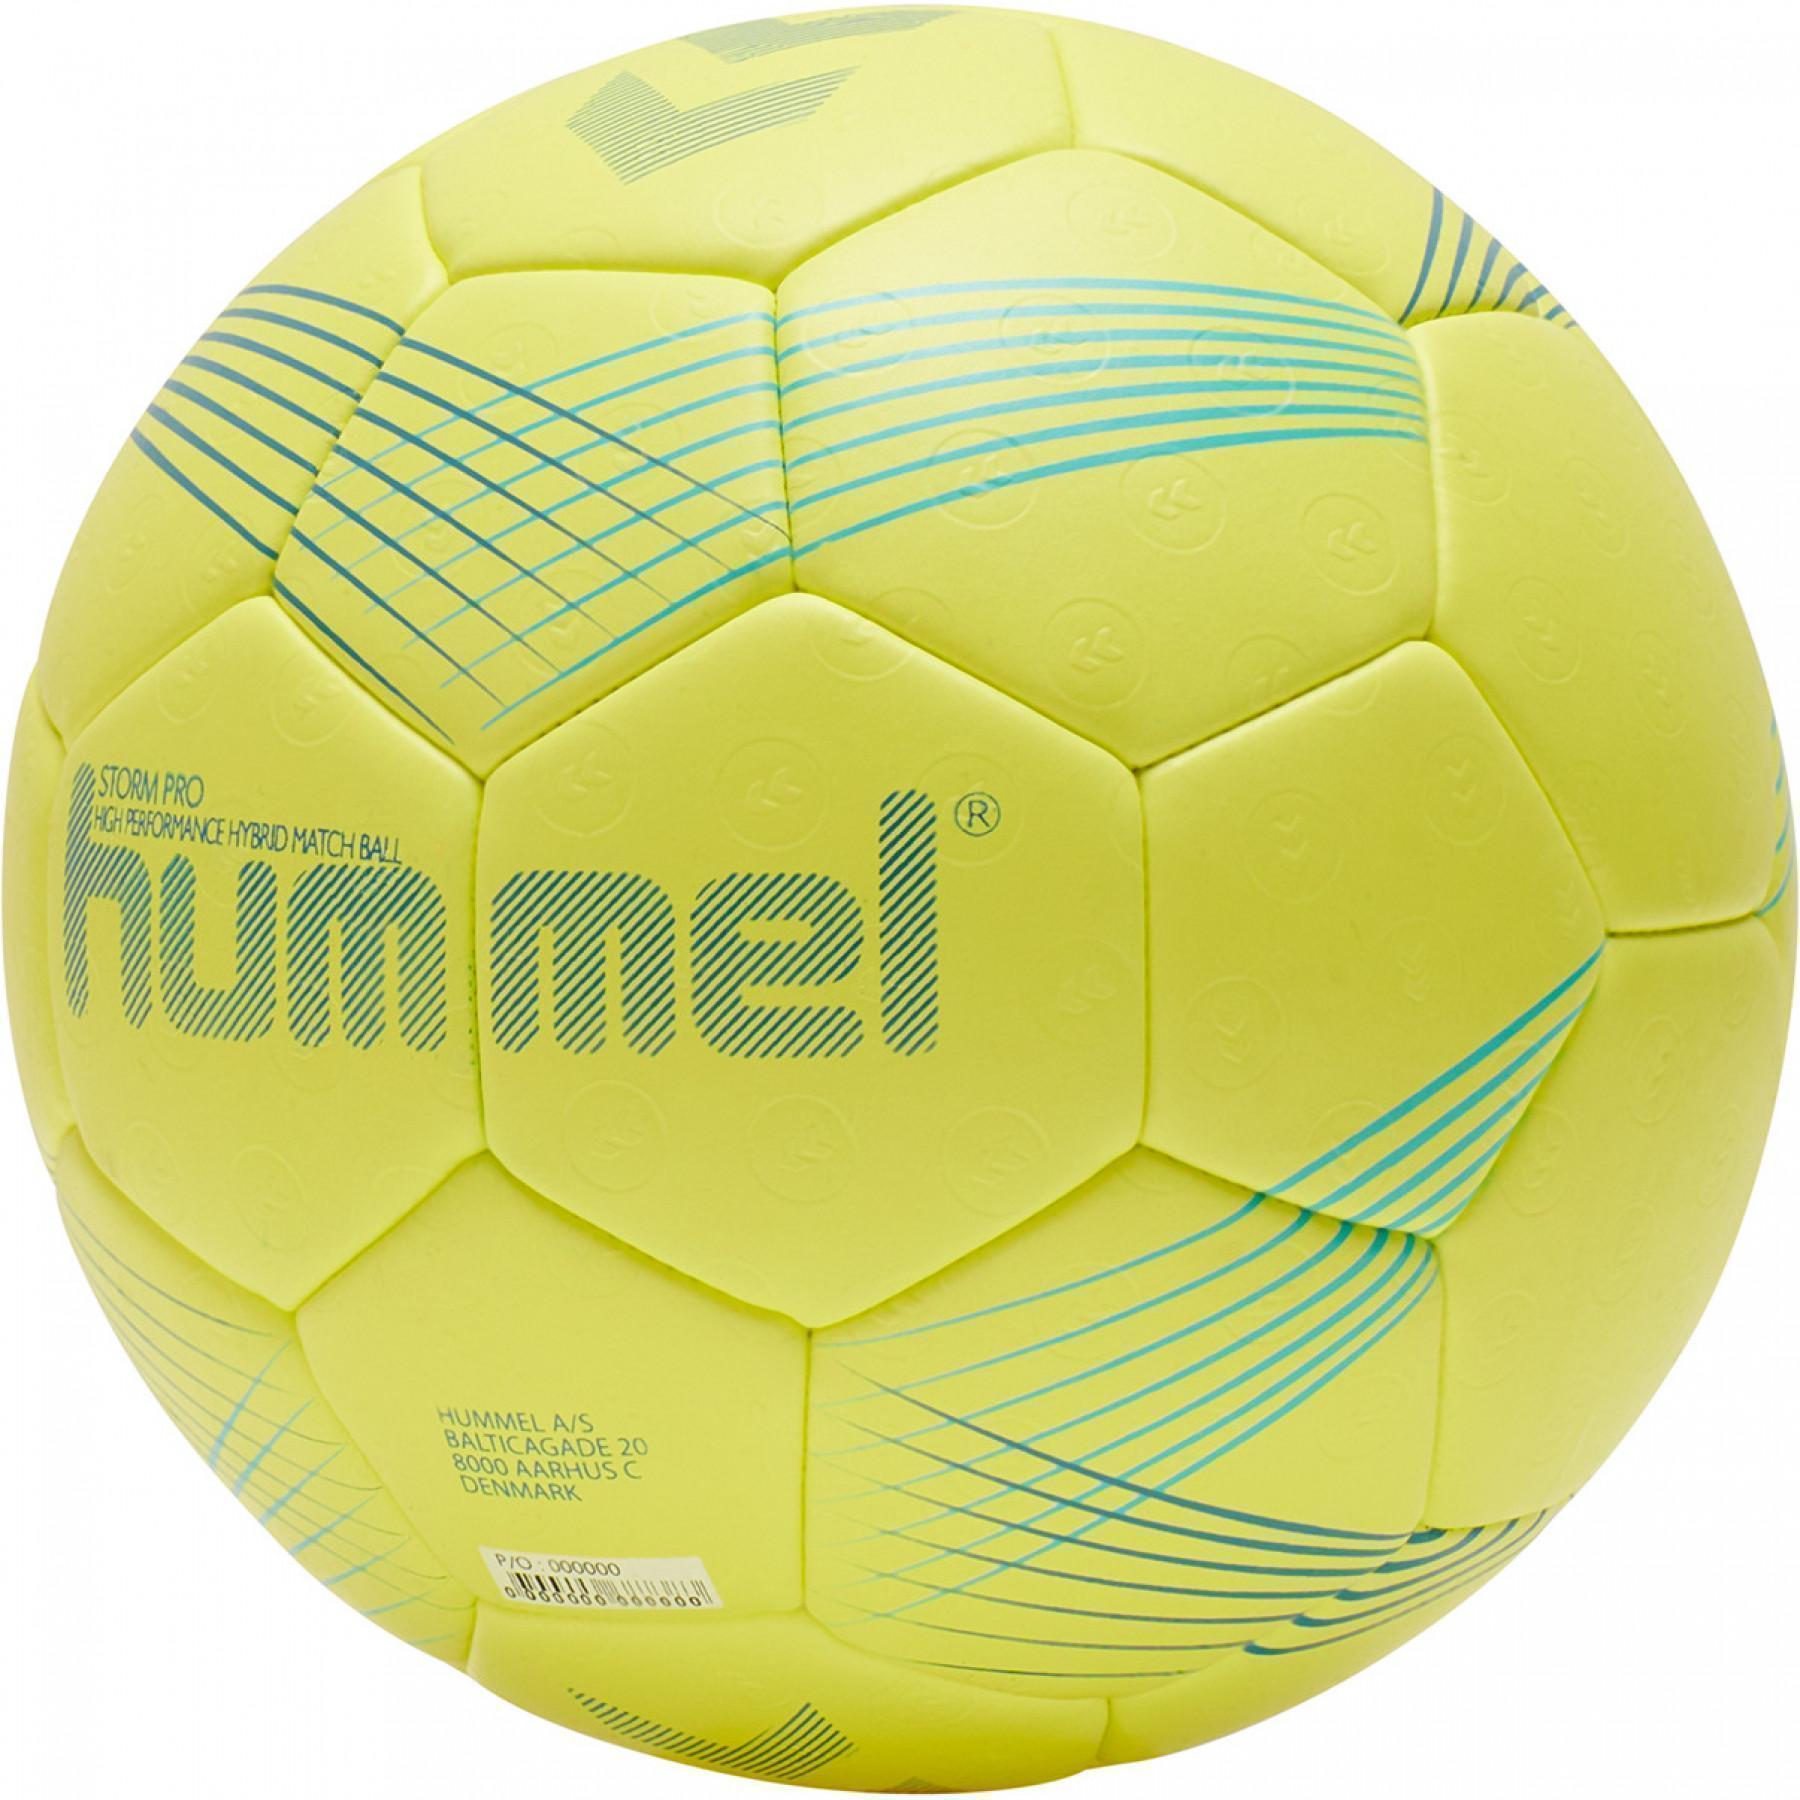 Piłka do piłki ręcznej Hummel storm hmlPRO hb